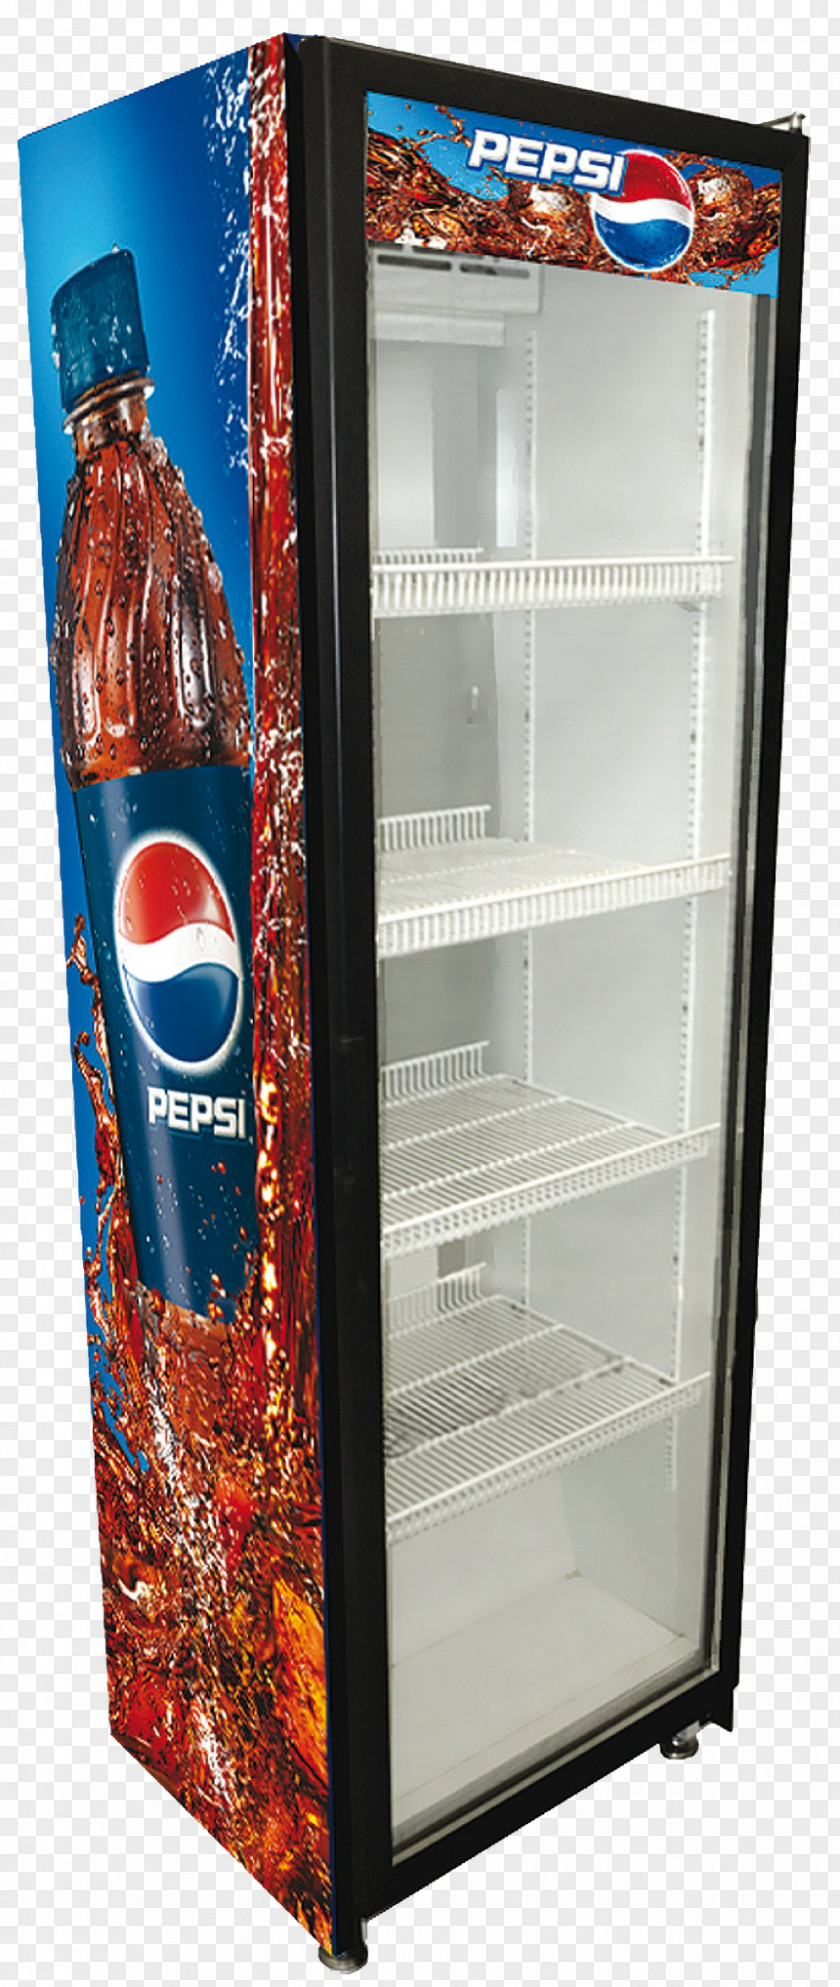 Pepsi Beer Cabinetry Ukraine UBC Group Display Case PNG